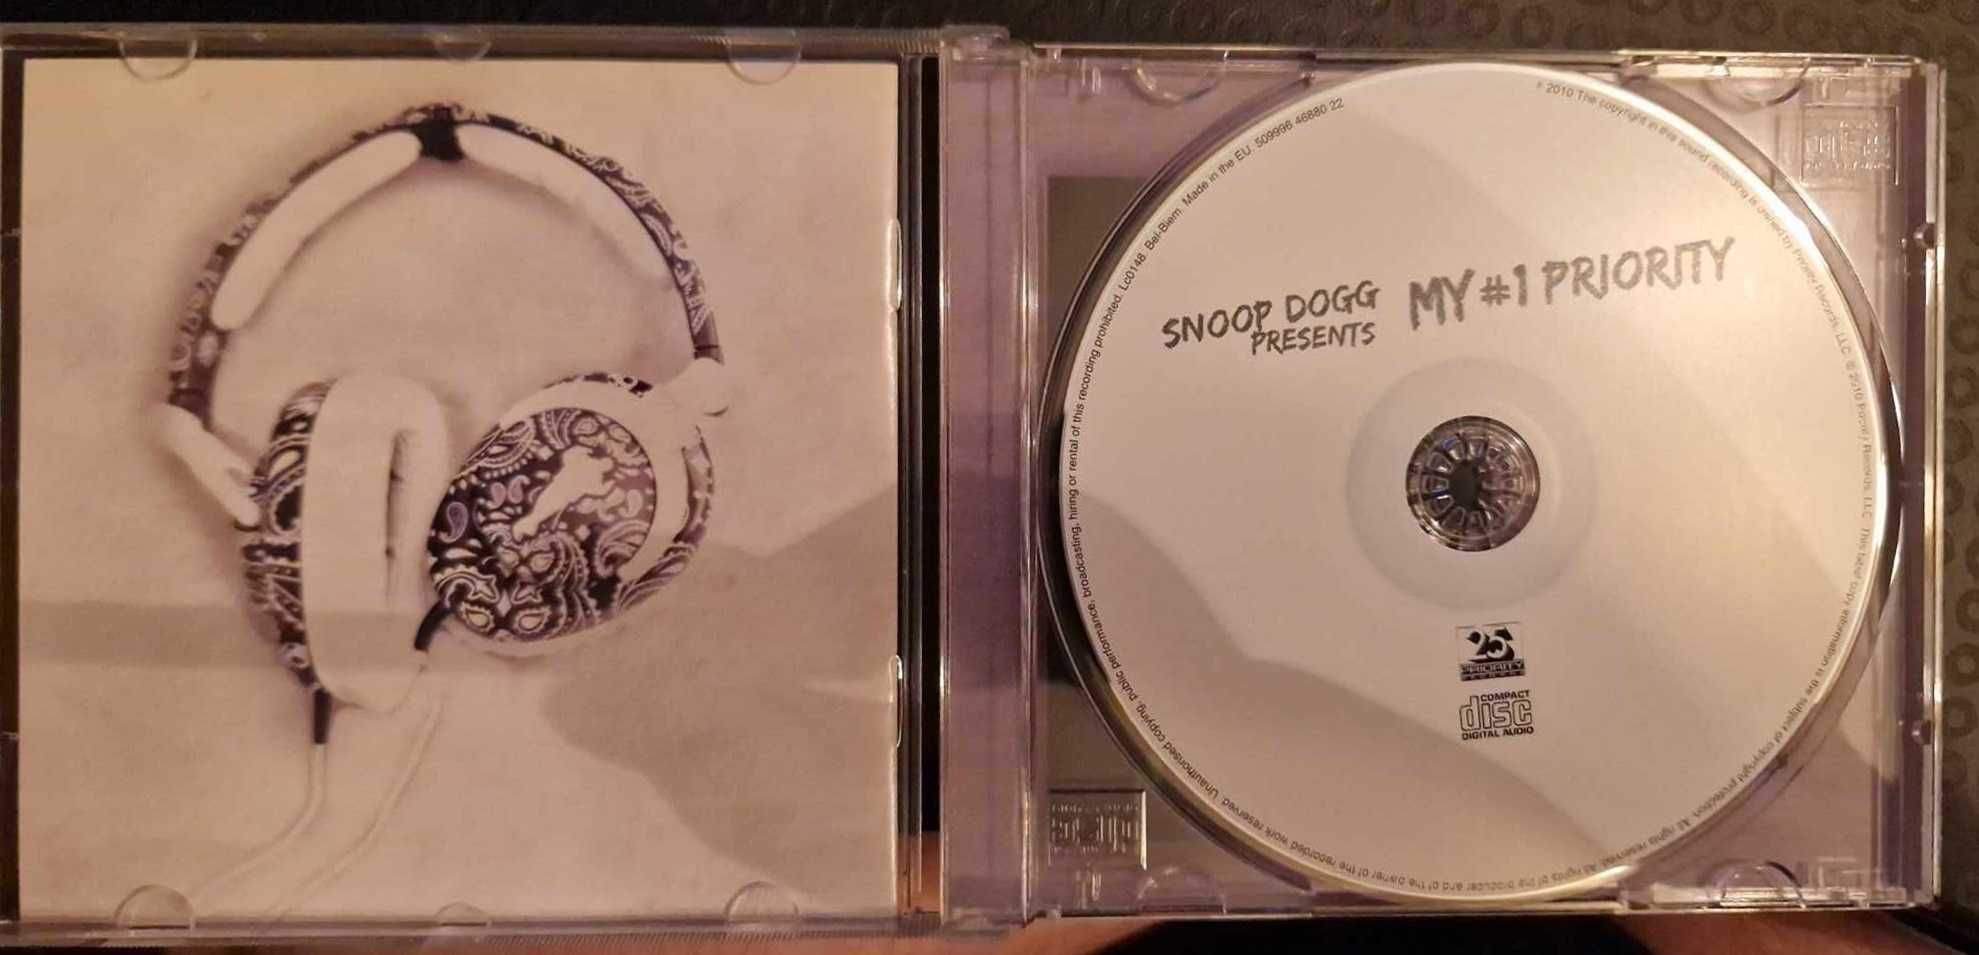 My #1 Priority - Snoop Dogg CD